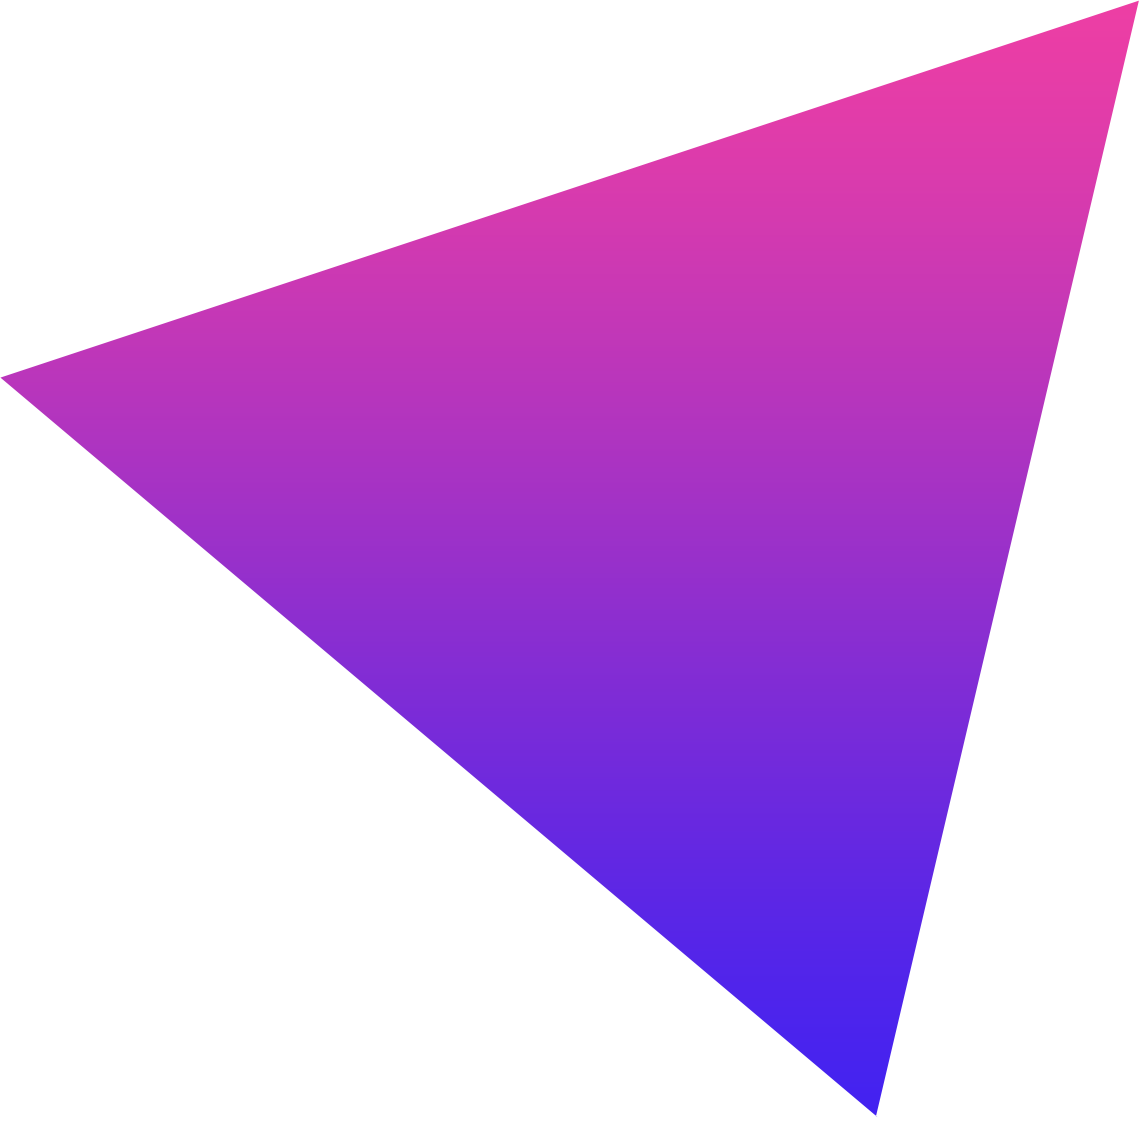 Triangle